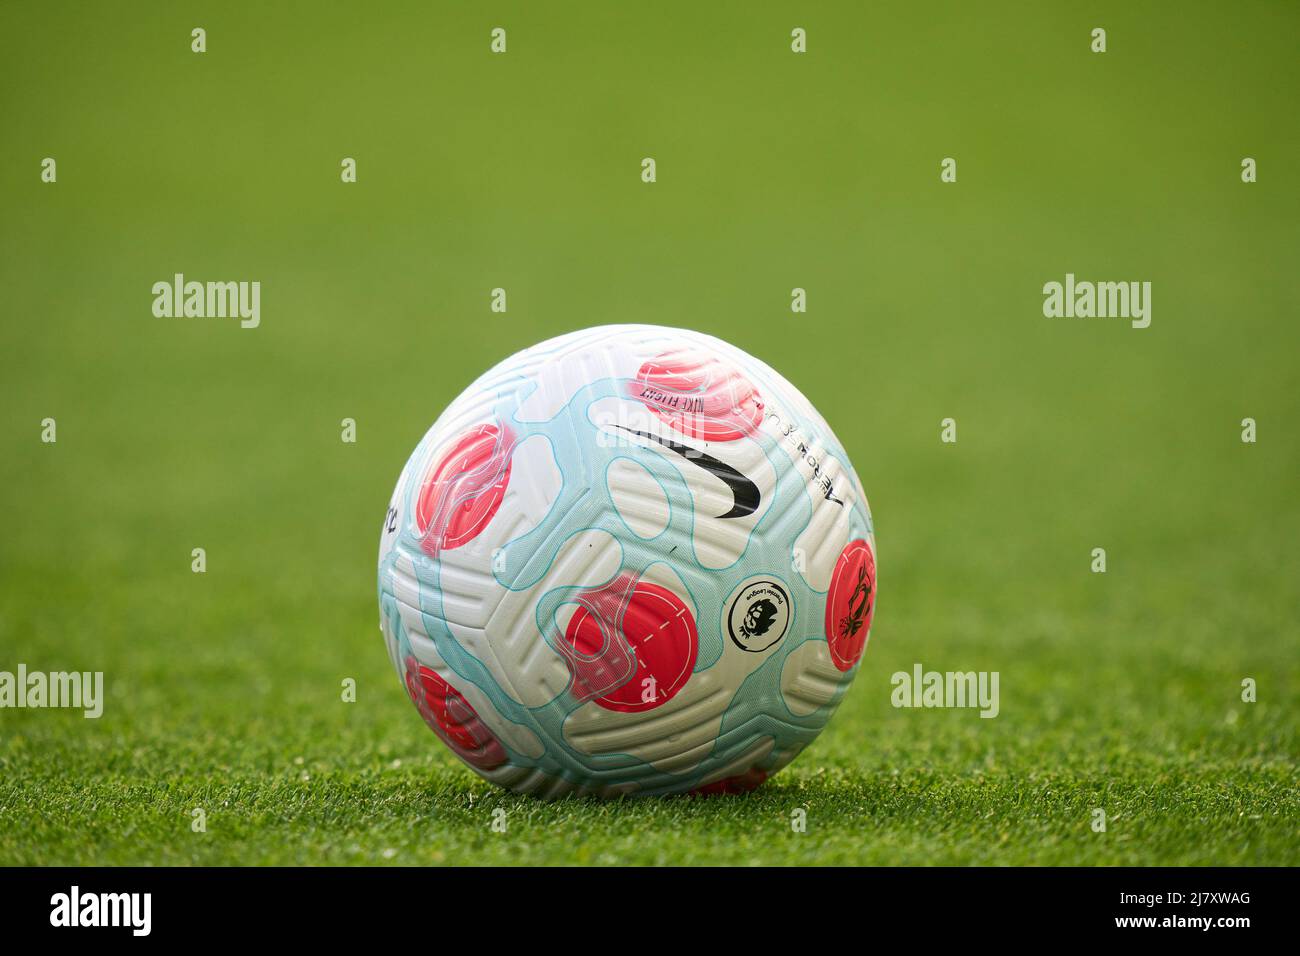 Nike Premier league Football Ball 2021/22 Stock Photo